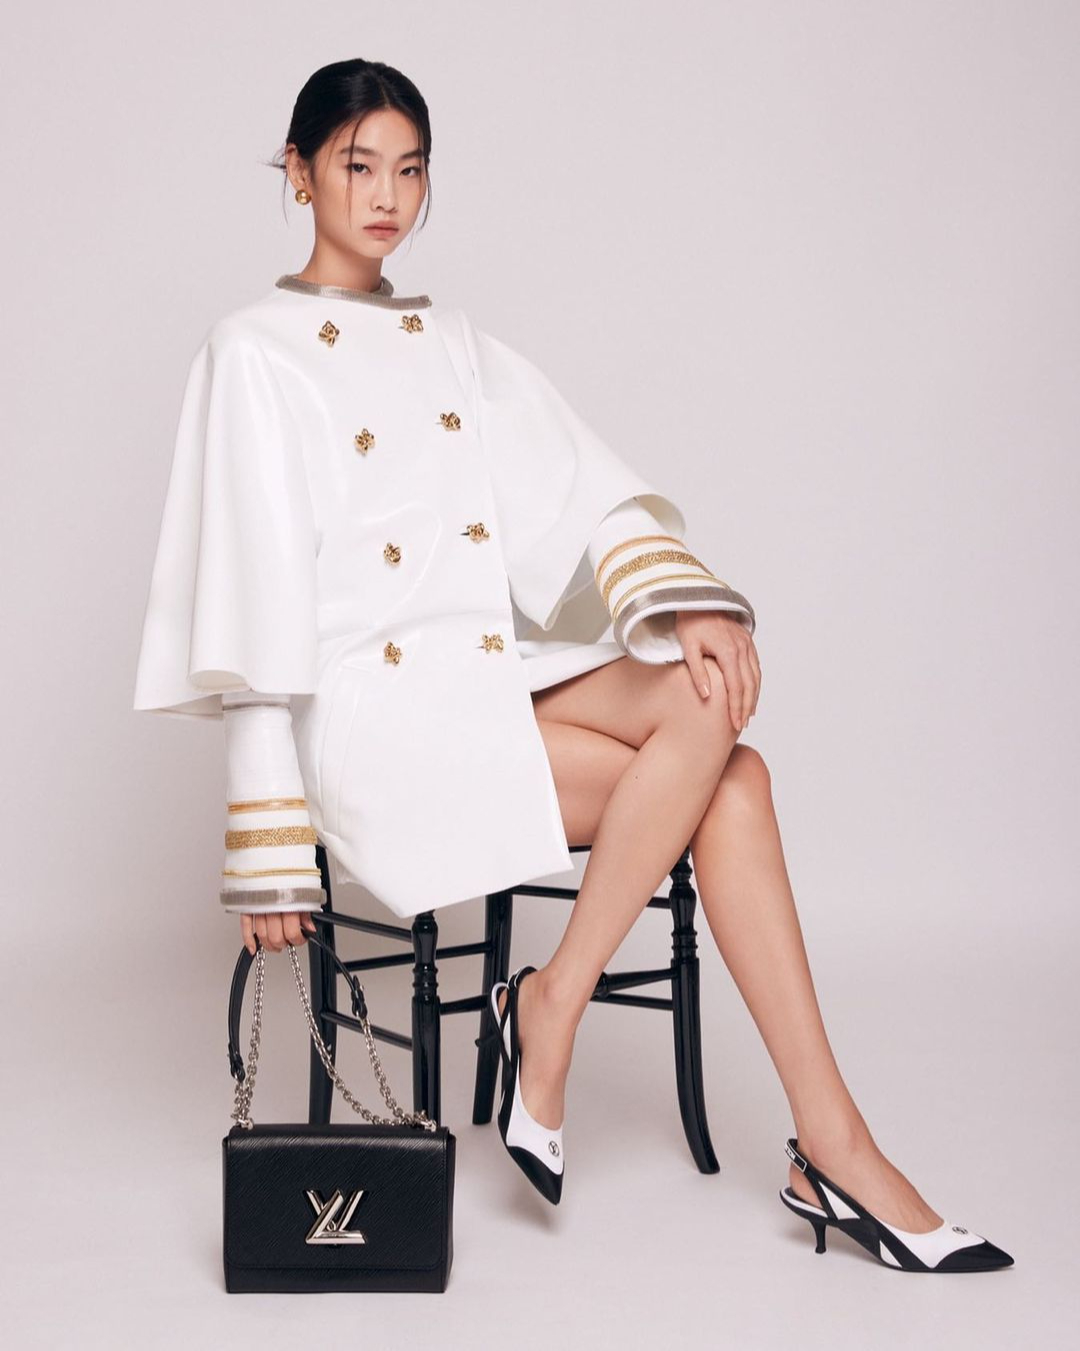 Хо Ен Чон в рекламной кампании Louis Vuitton, 2021